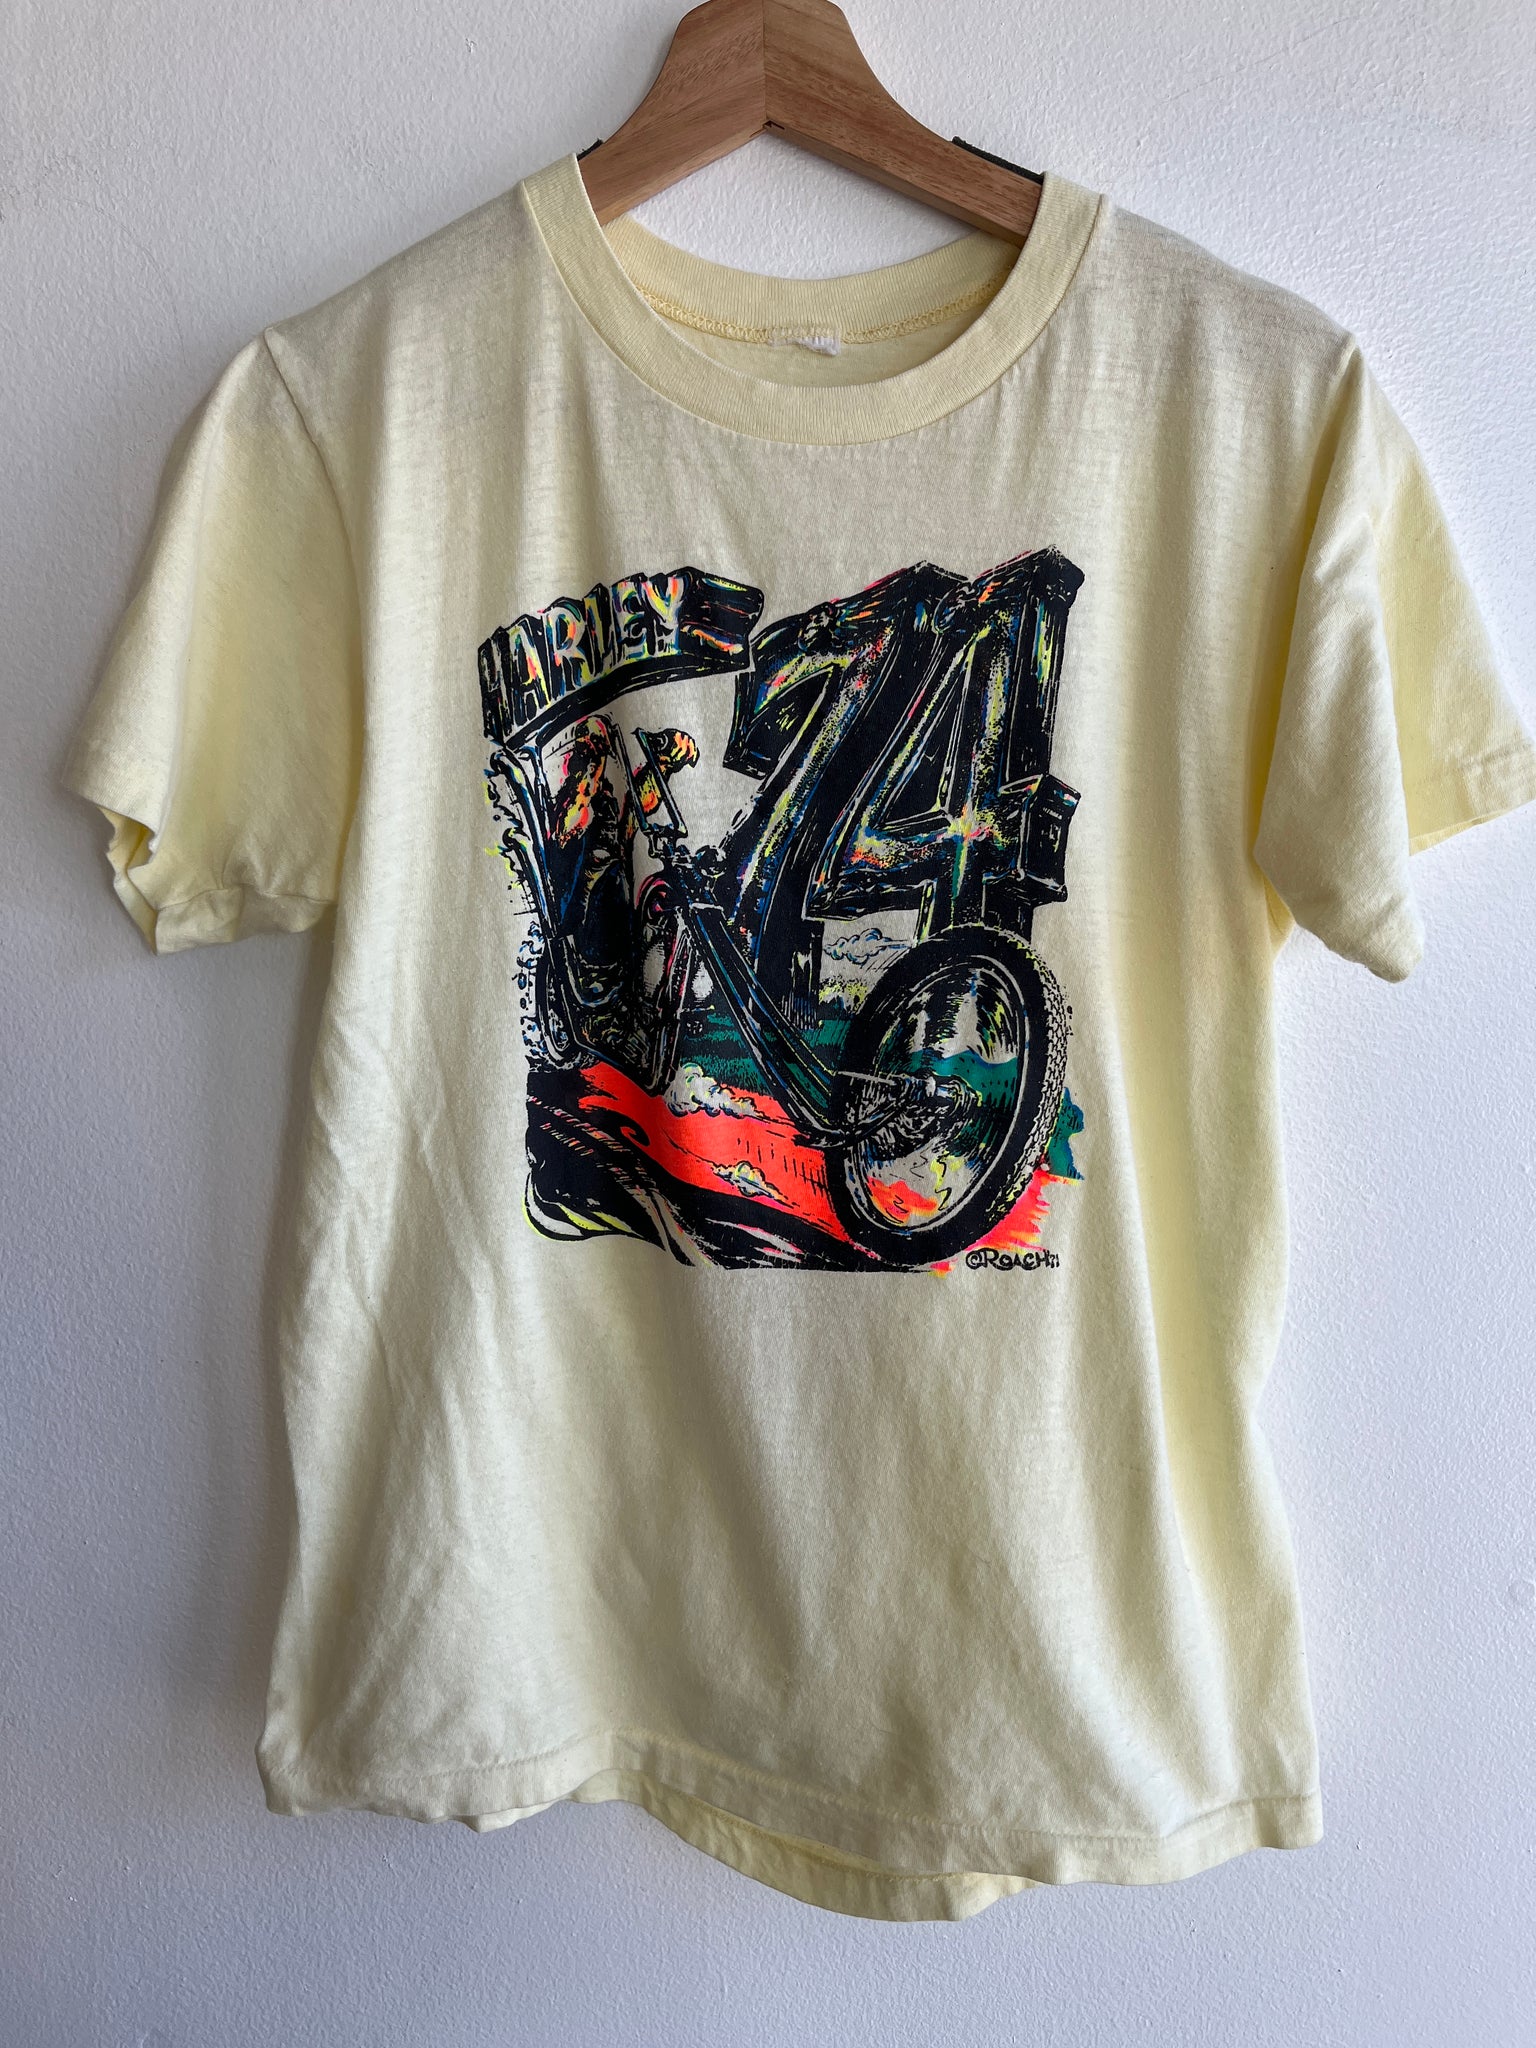 Vintage 1974 Roach Harley Davidson T-Shirt